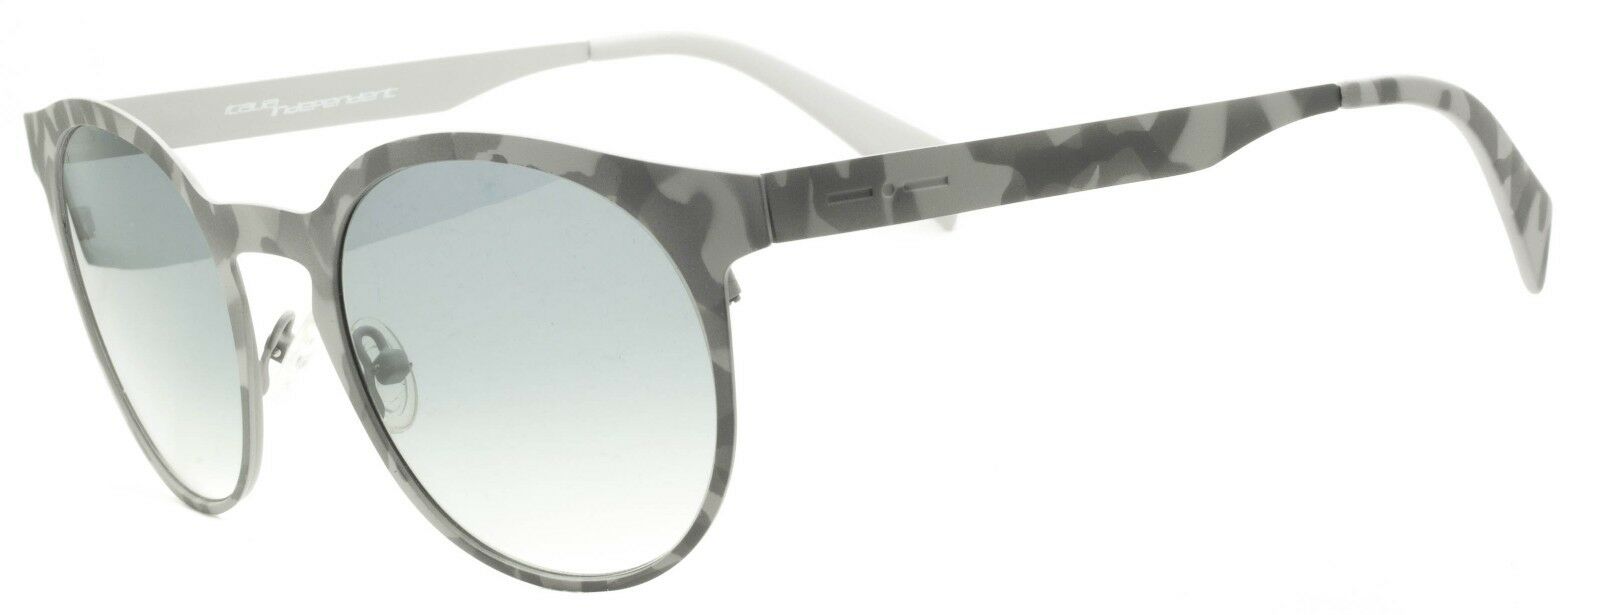 ITALIA Adidas 023/096 Sunglasses Frames Eyeglasses New Italy GGV Eyewear